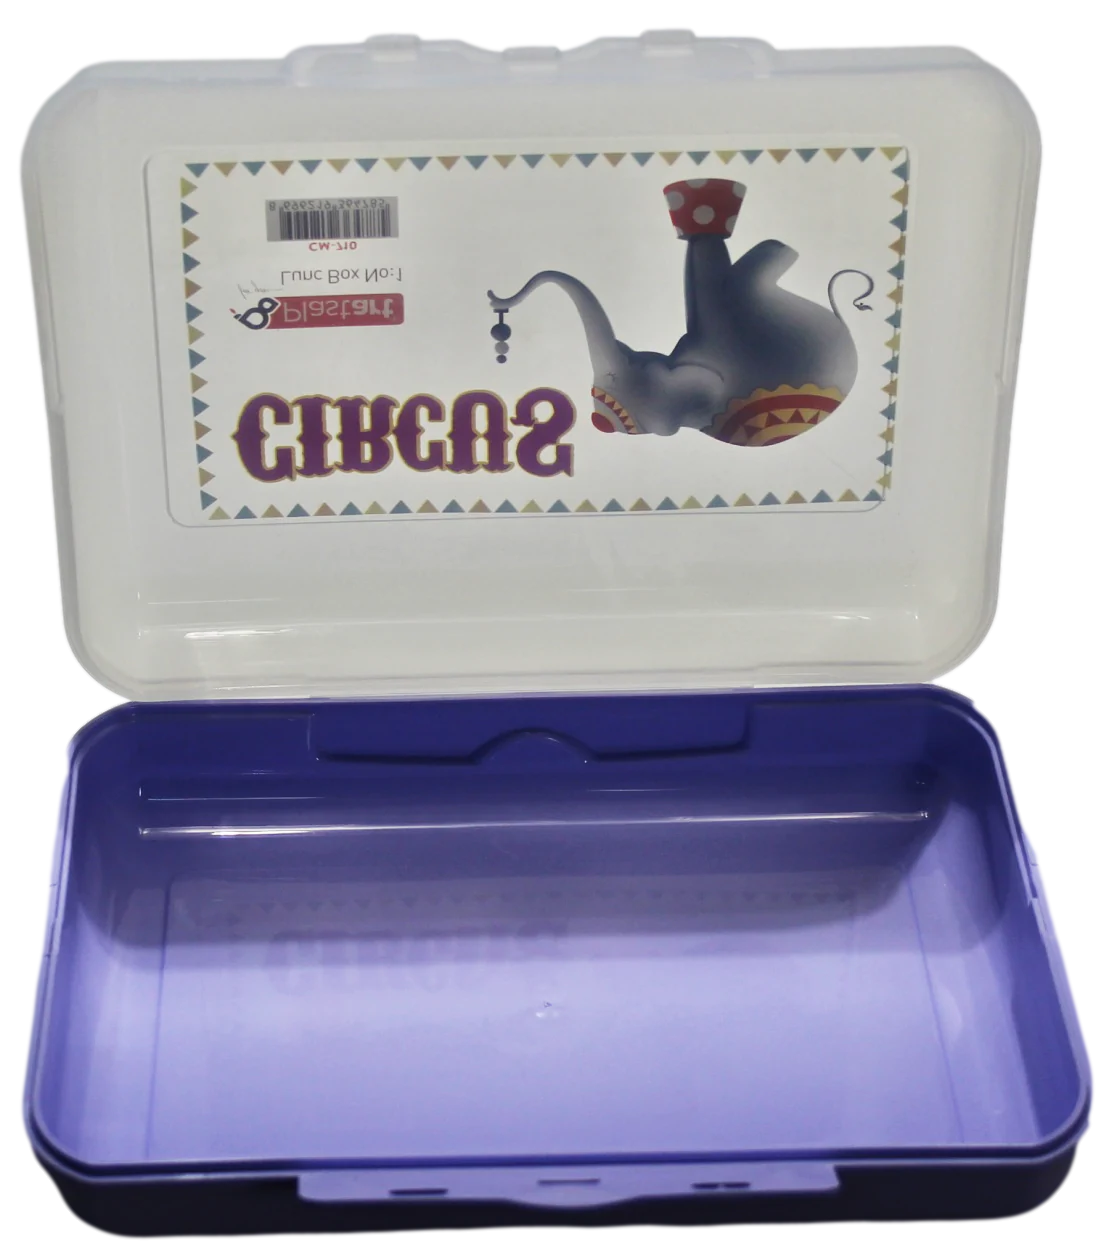 Circus Plastart Lunch Box No1 Plastic Assorted Colours CM710 (Parcel Rate)